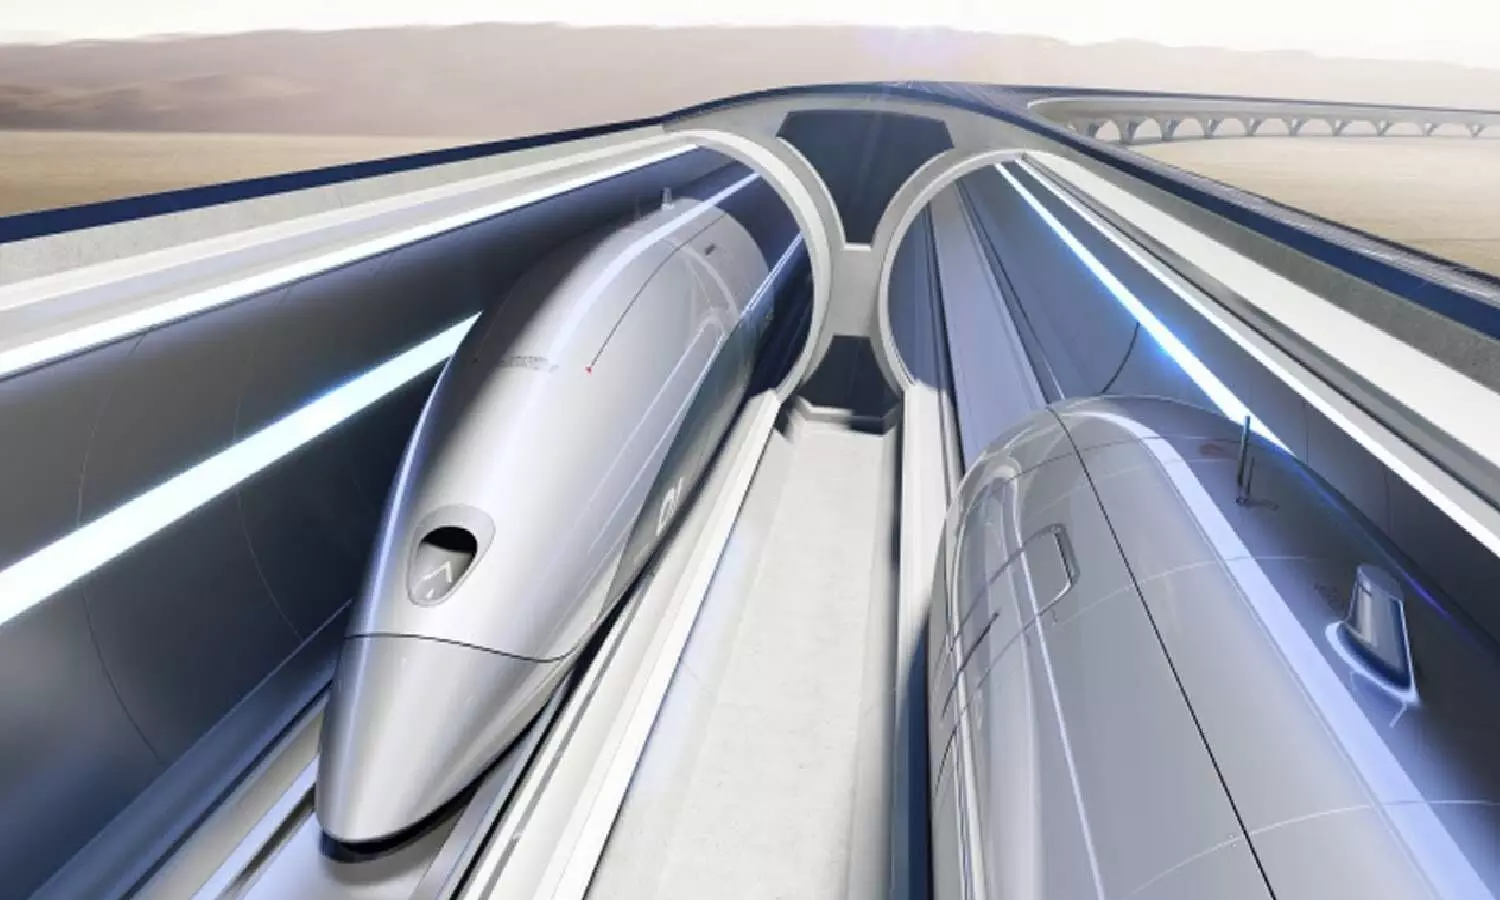 Bizz Buzz explainer: Hyperloop the fastest mode of transport